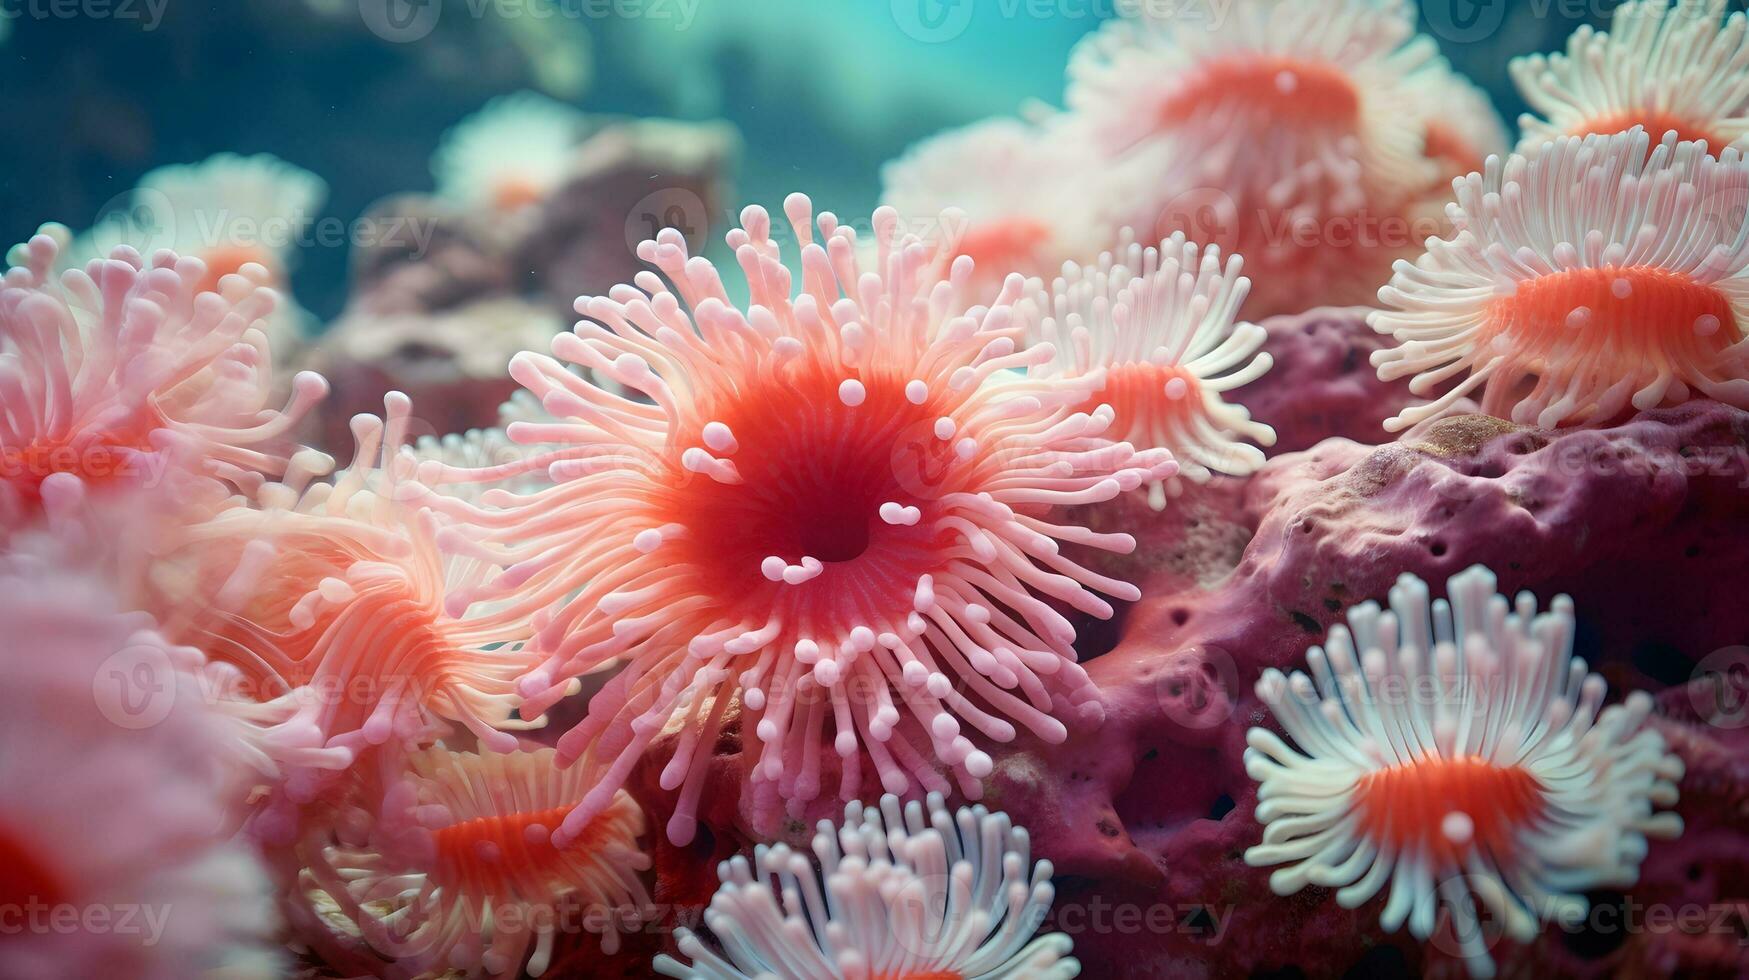 anemone actinia texture underwater reef sea coral AI Generated photo